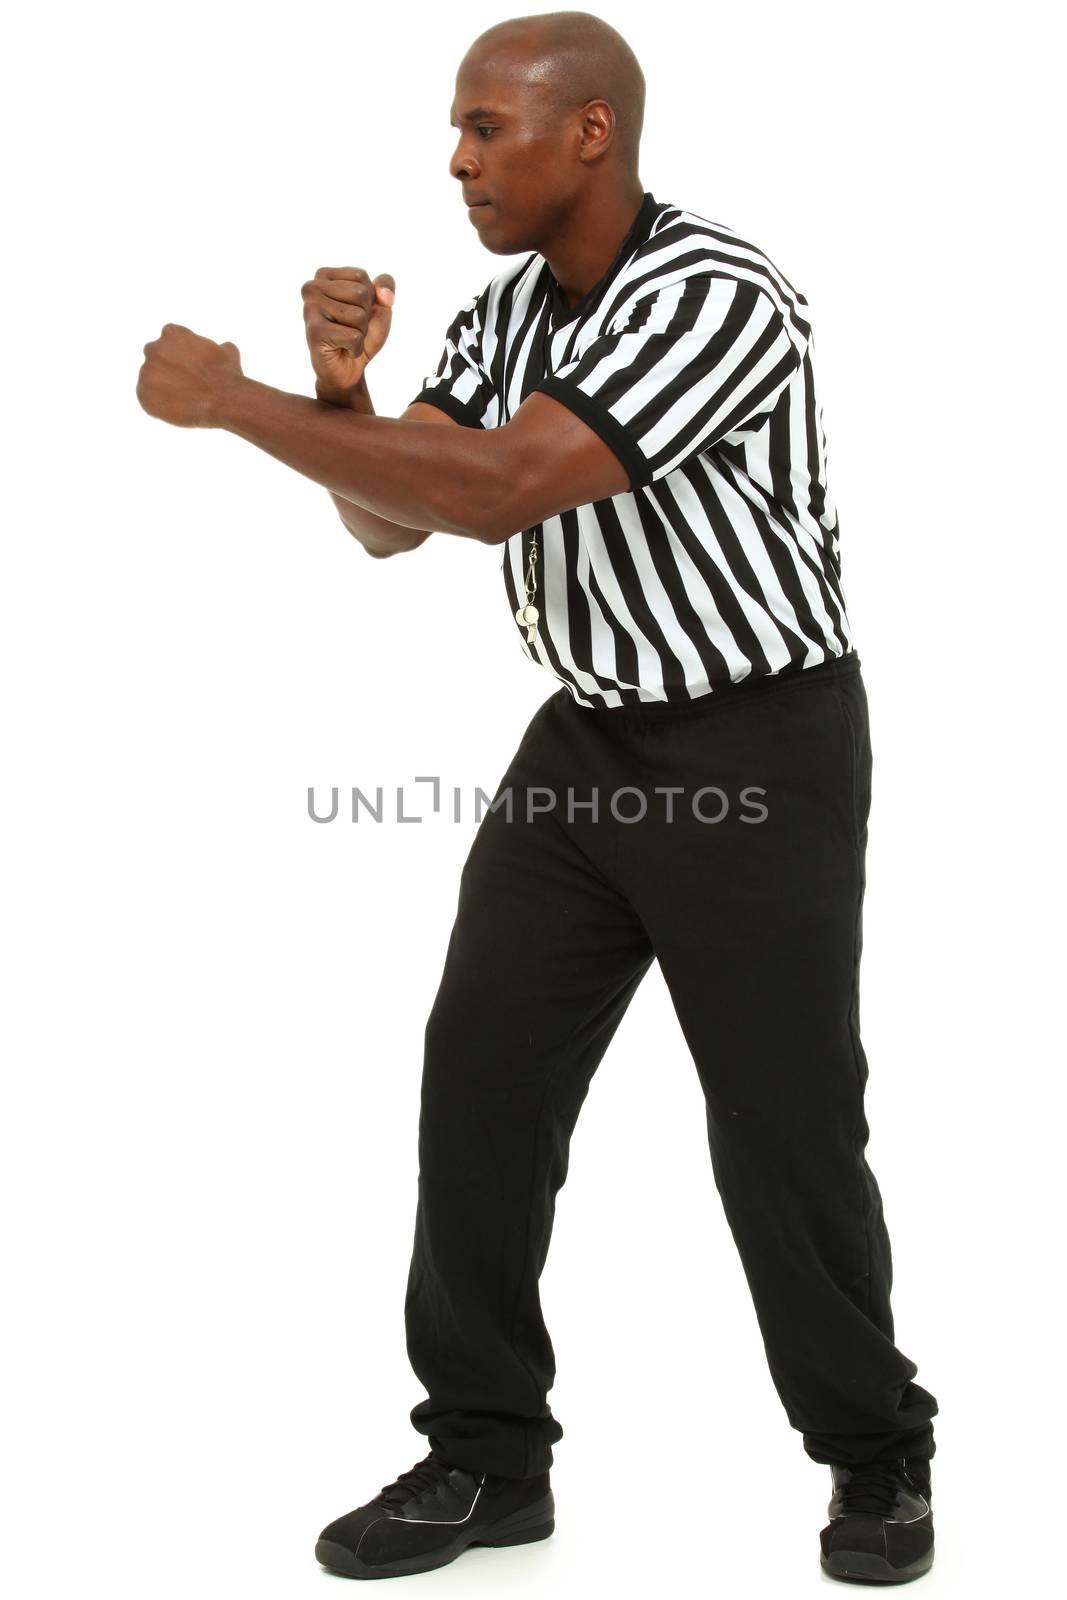 Attractive fit black man in referee uniform over white.